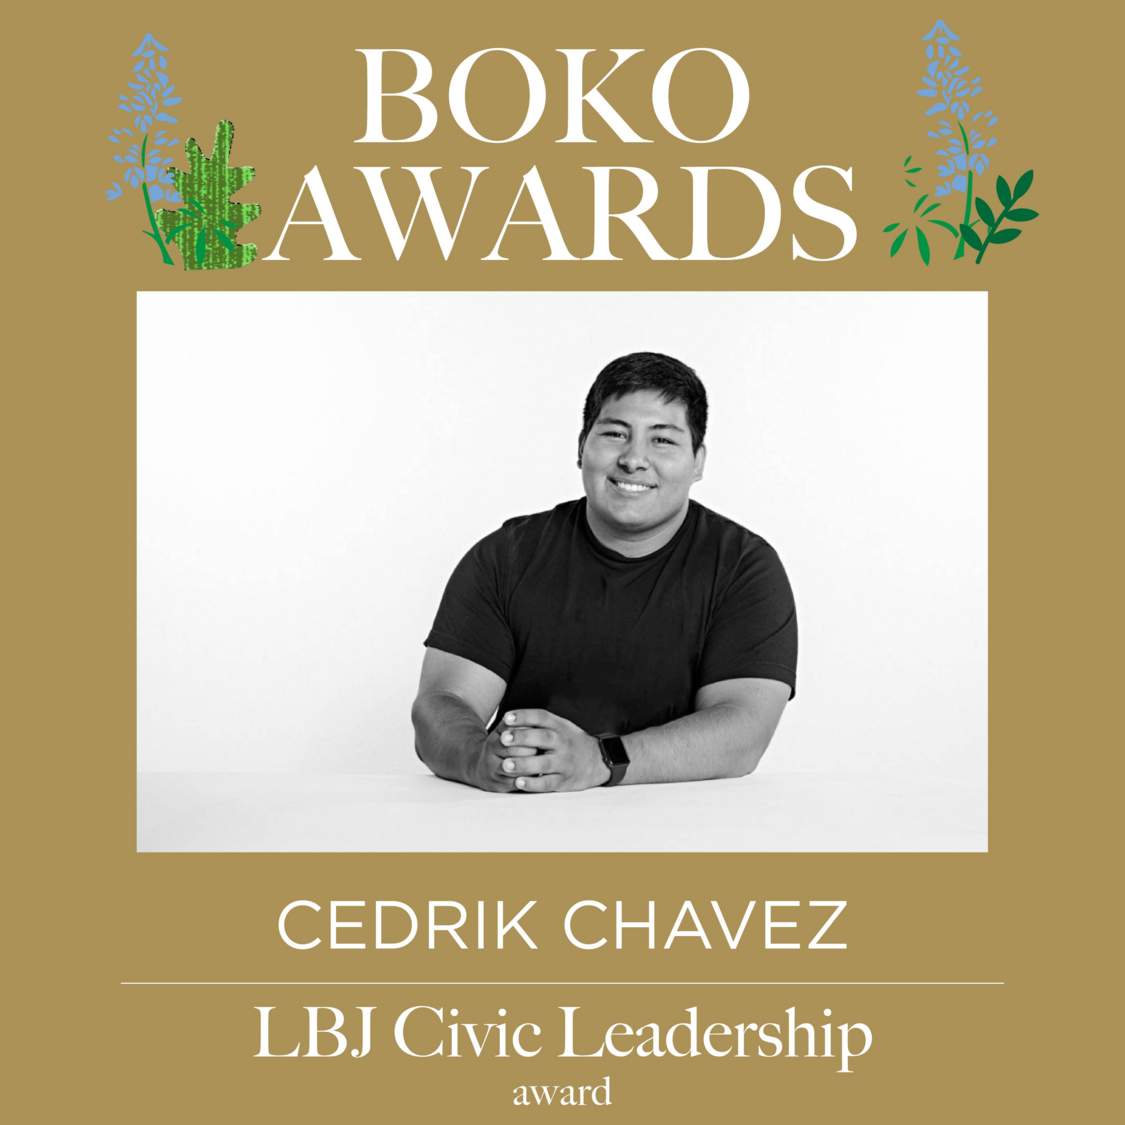 Picture of text displaying that Cedrik Chavez won the LBJ Civic Leadership award.